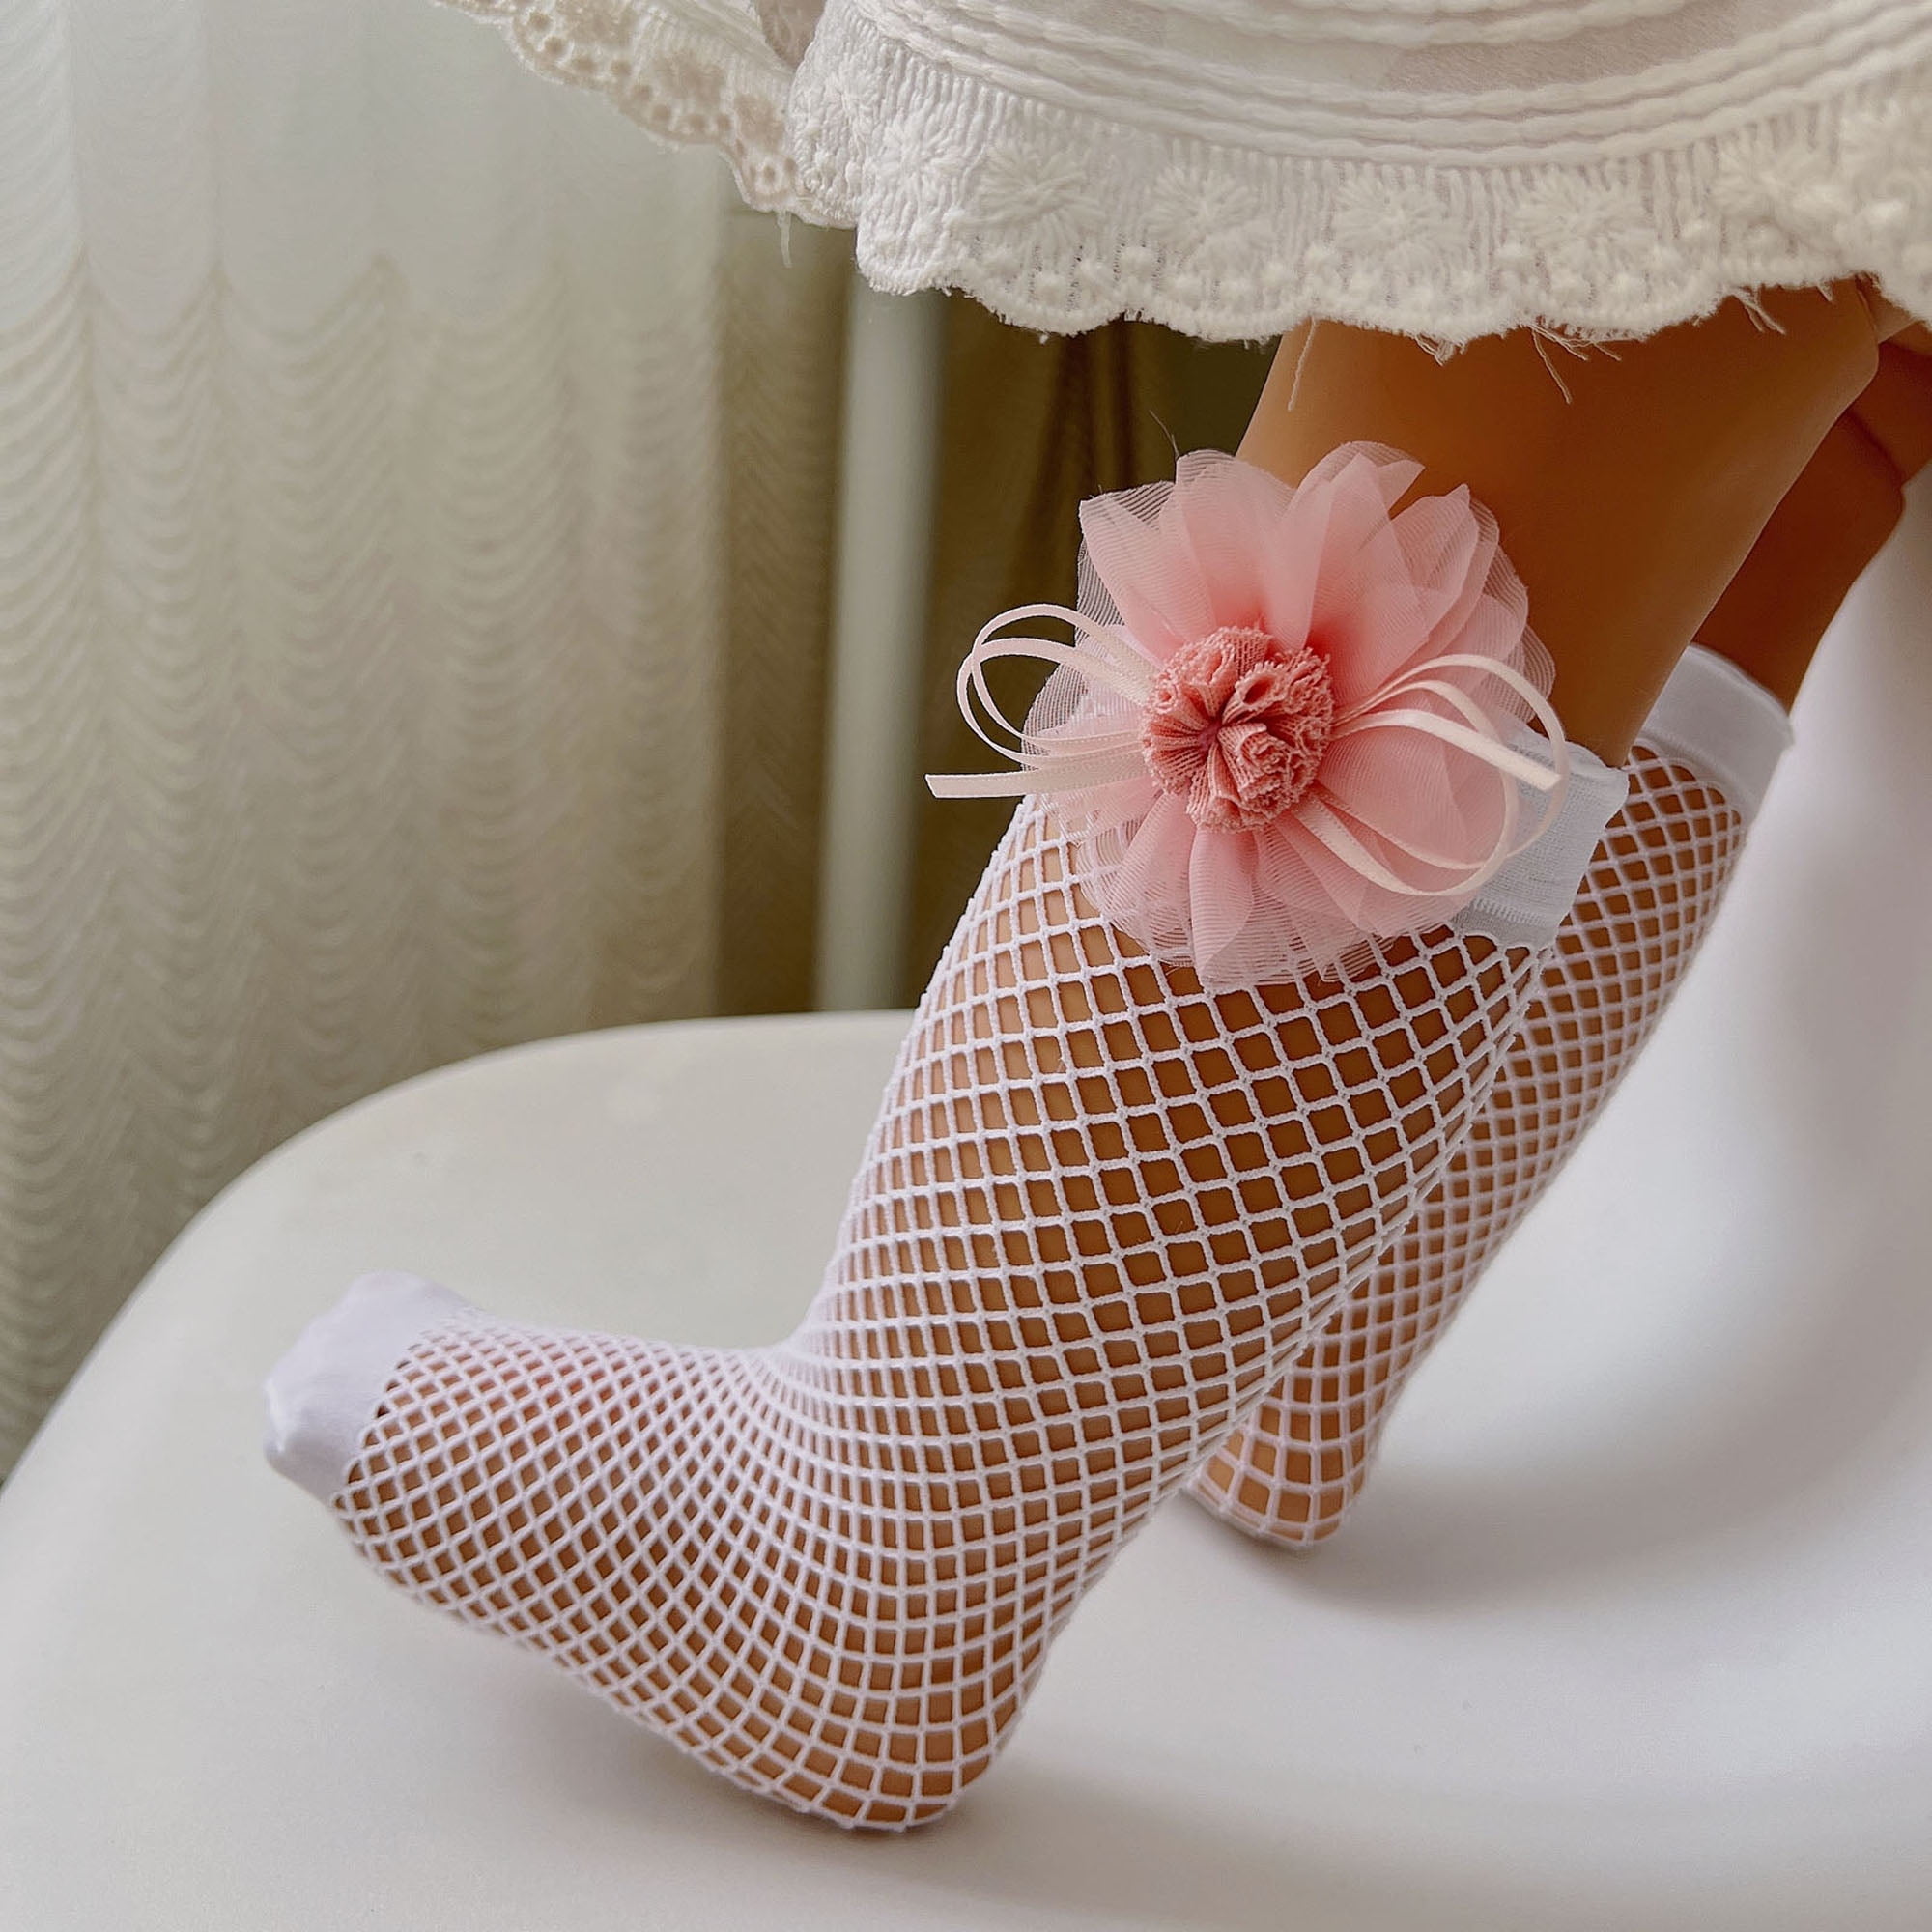 Jkerther Kids Baby Girl Socks Fishnet Stockings Tights Mesh Fancy Dress  Socks with Bow 